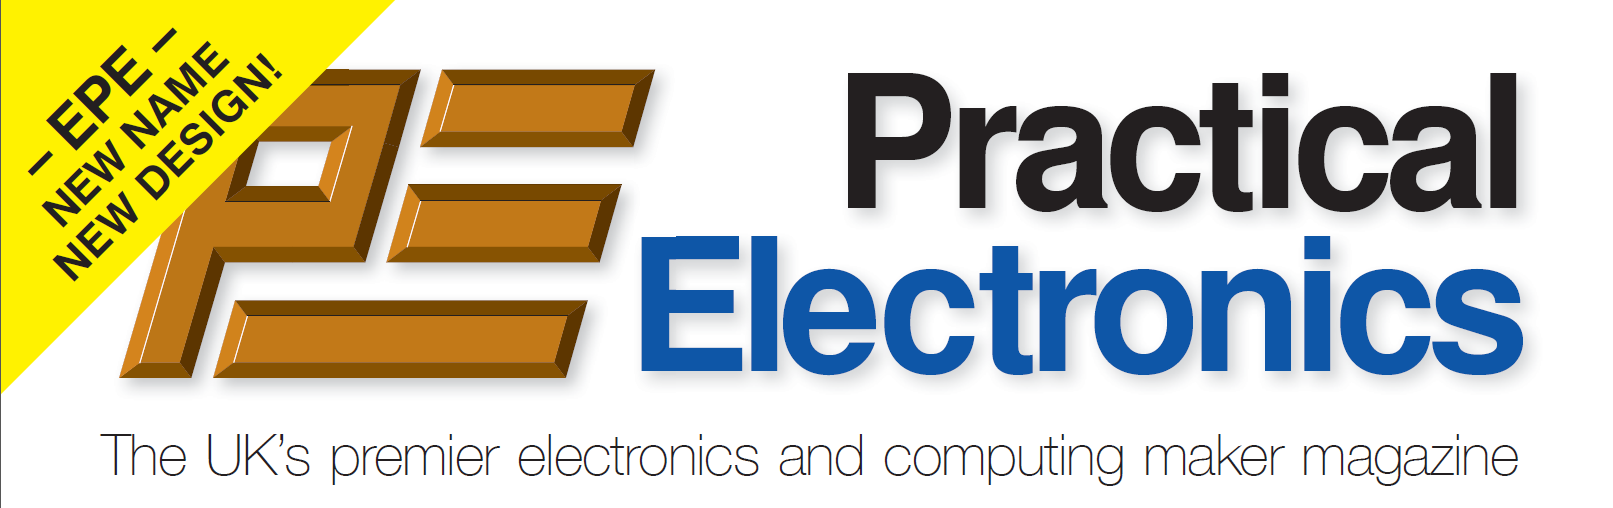 Everyday Practical Electronics Jaargang 2020 (12 nummers)